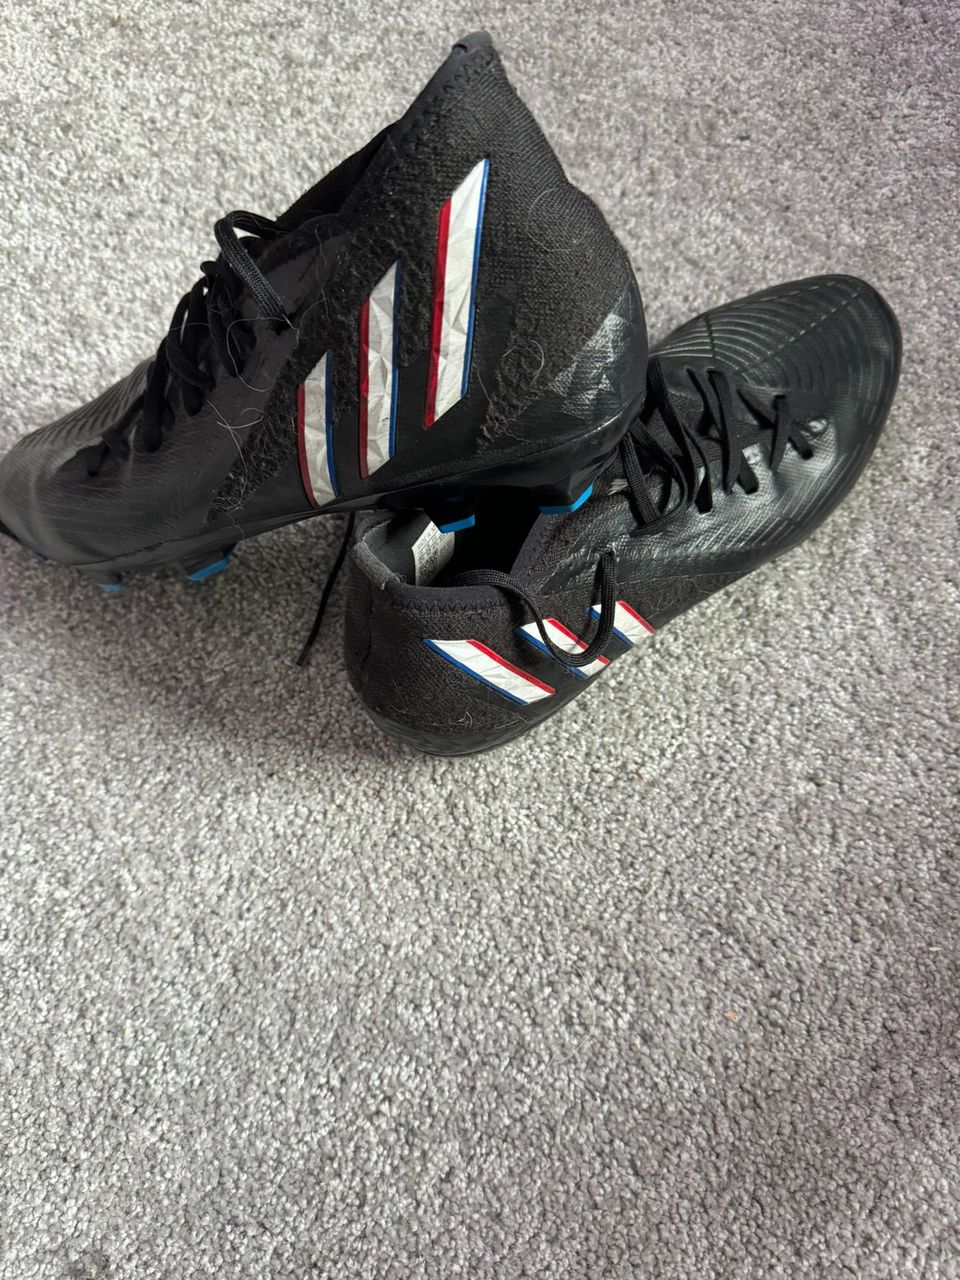 Adidas predator jalkapallo kengät